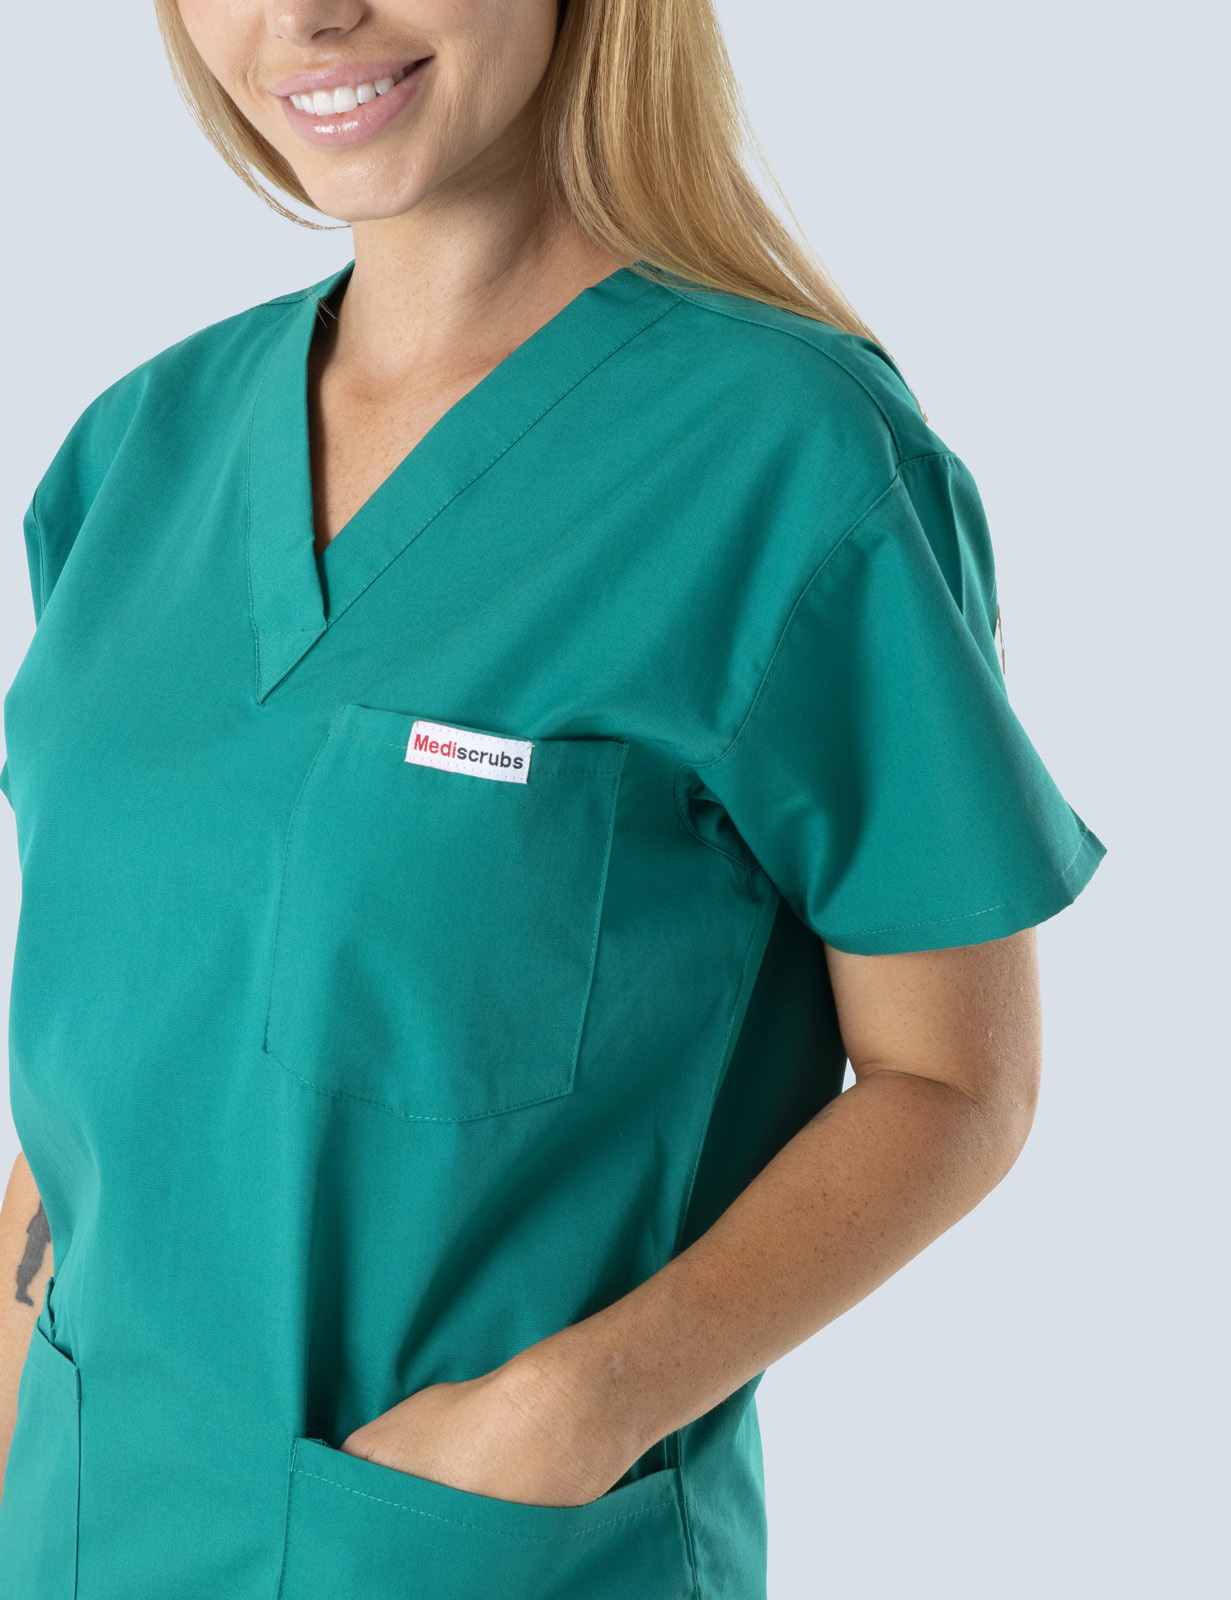 Queensland Children's Hospital Emergency Department Enrolled Nurse Uniform Top Bundle  (4 Pocket Top in Hunter incl Logos)